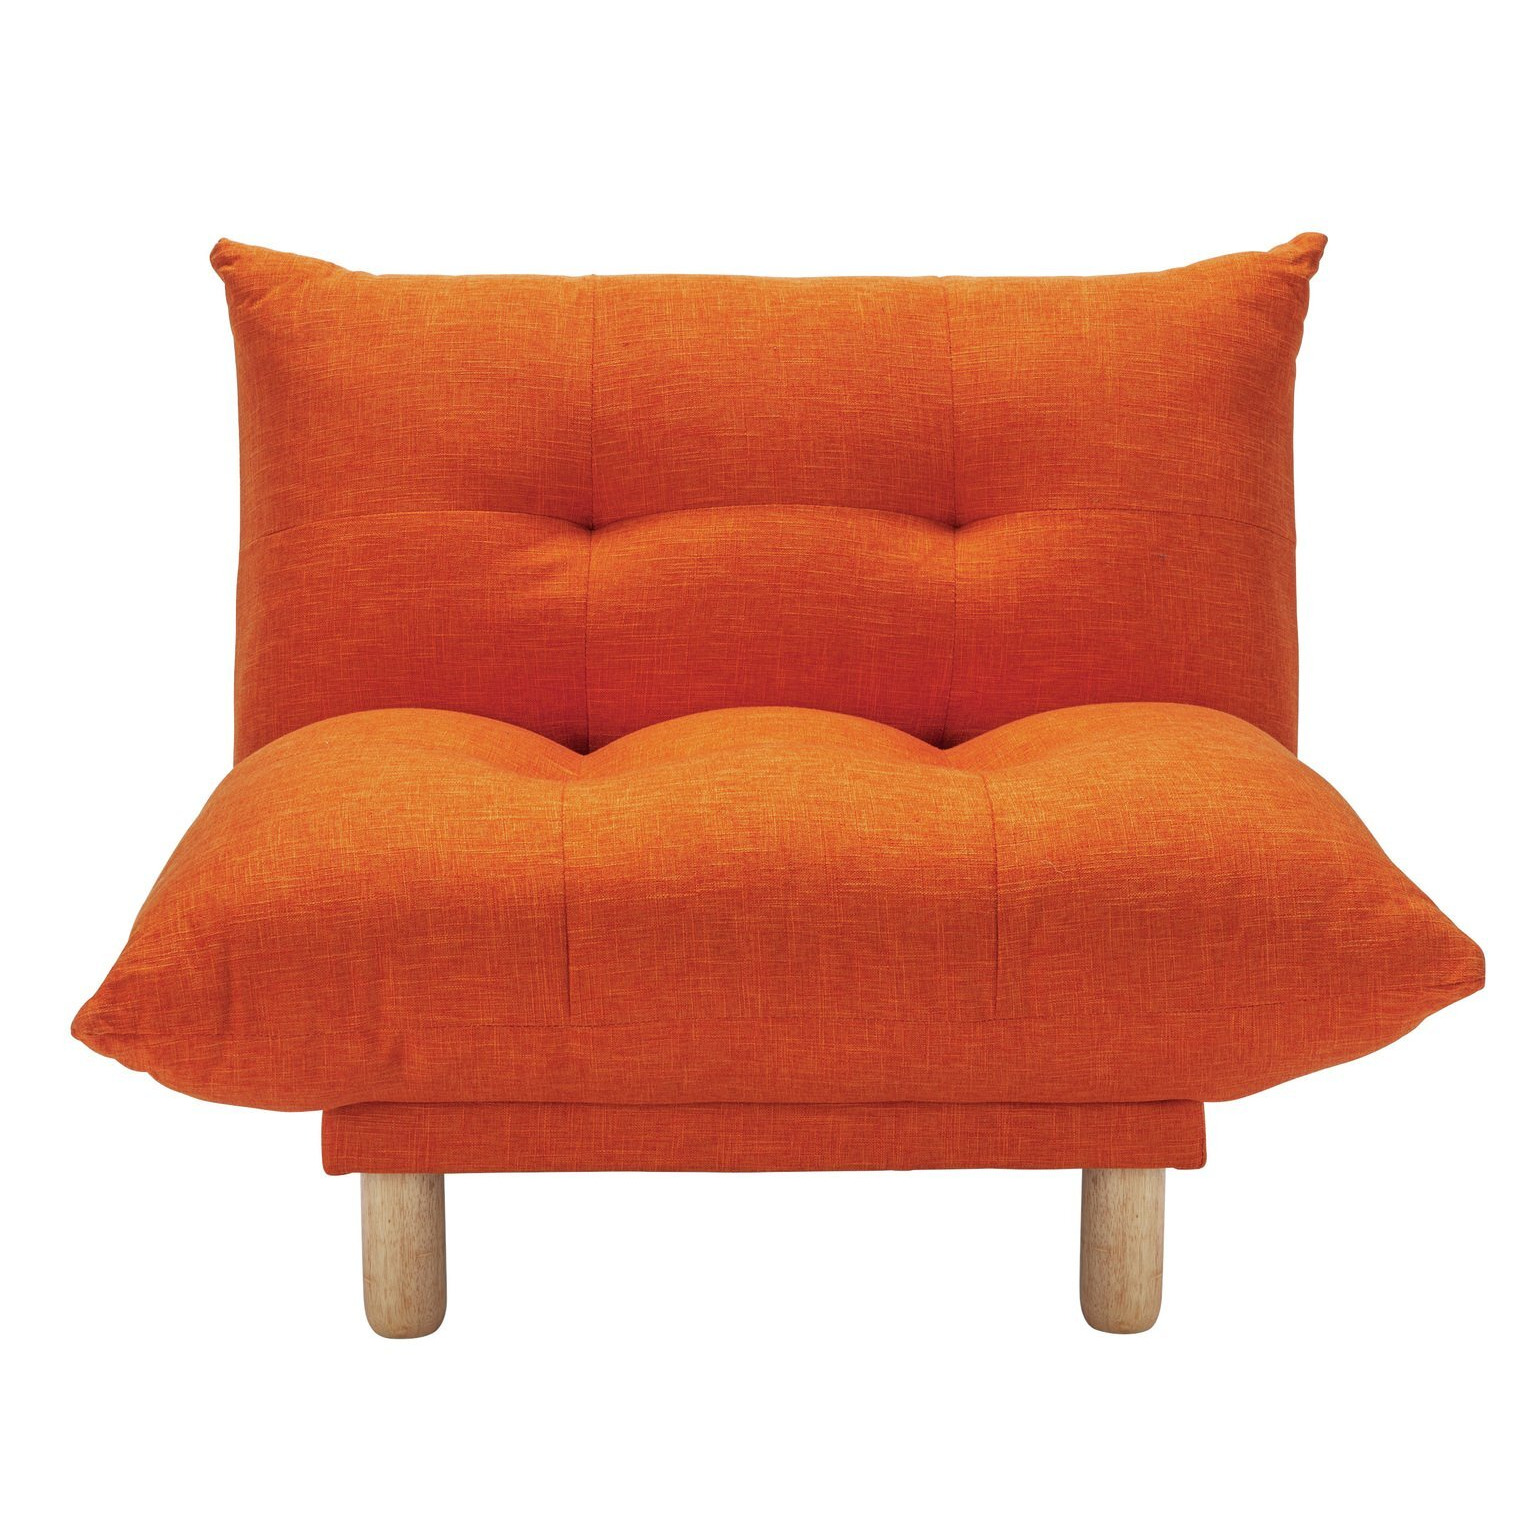 Habitat Kota Fabric Armchair - Orange - image 1